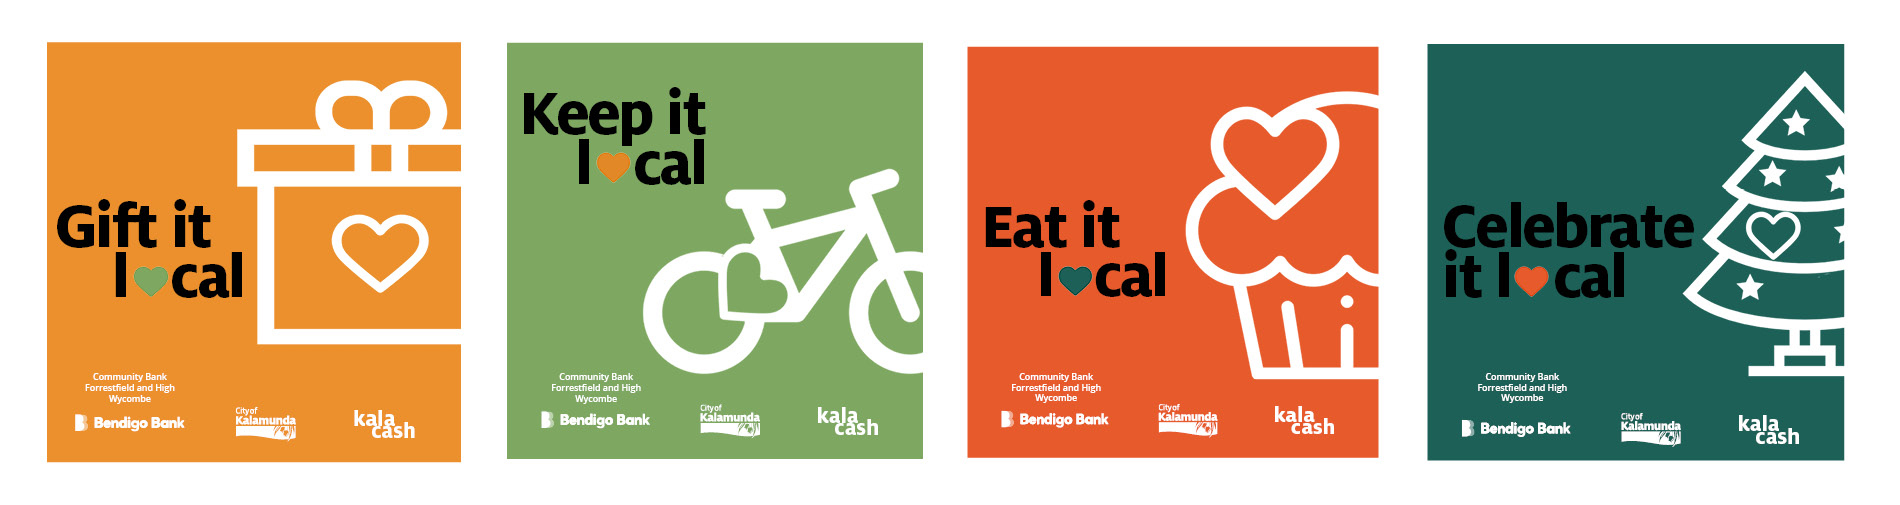 KalaCash - Gift it local. Keep it local. Eat it local. Celebrate it local.